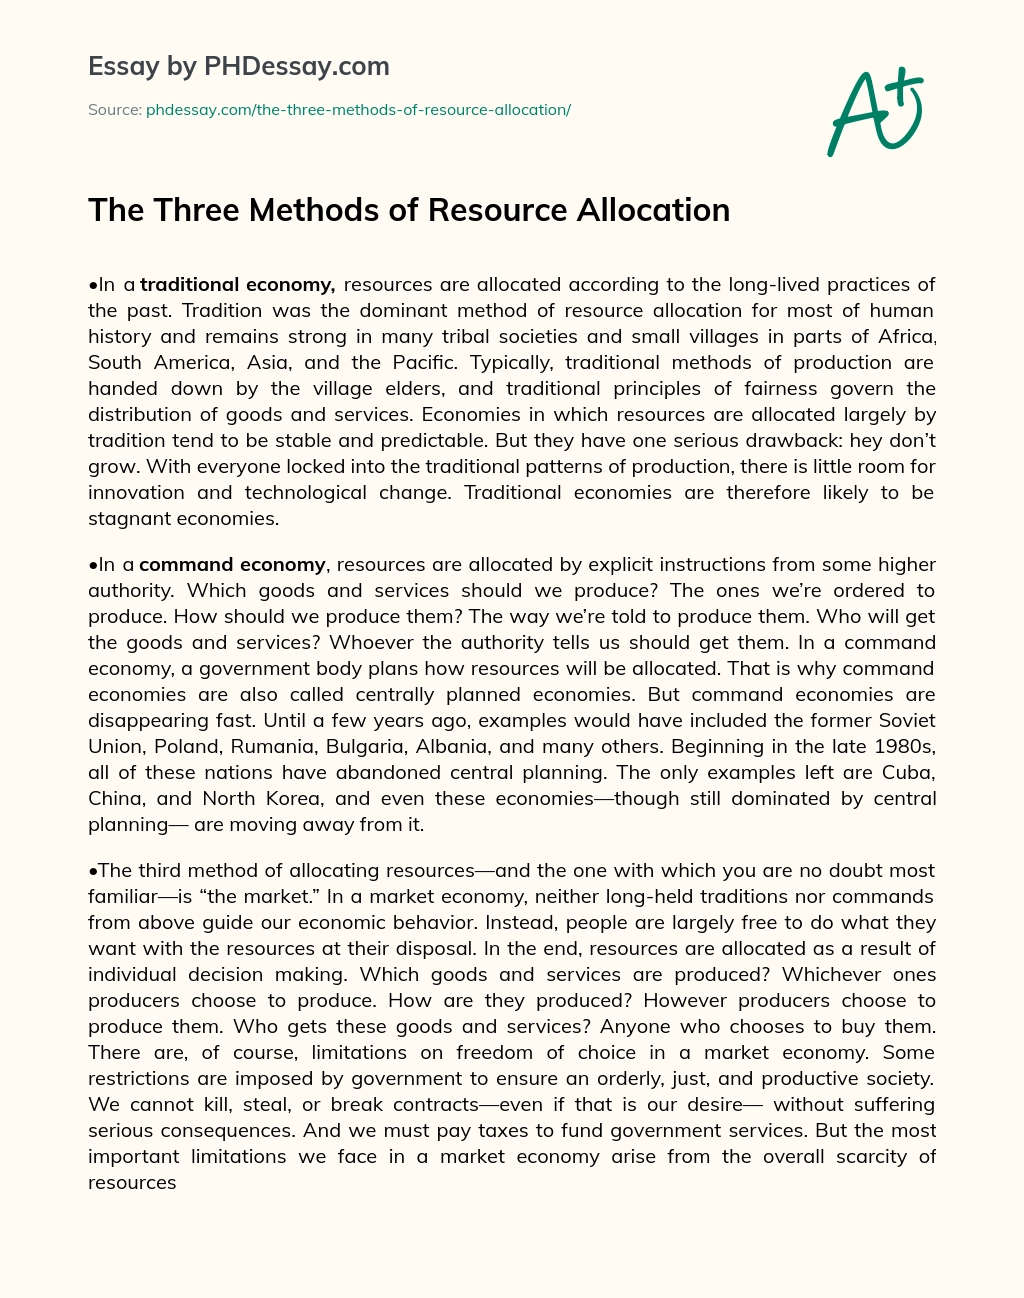 The Three Methods of Resource Allocation essay